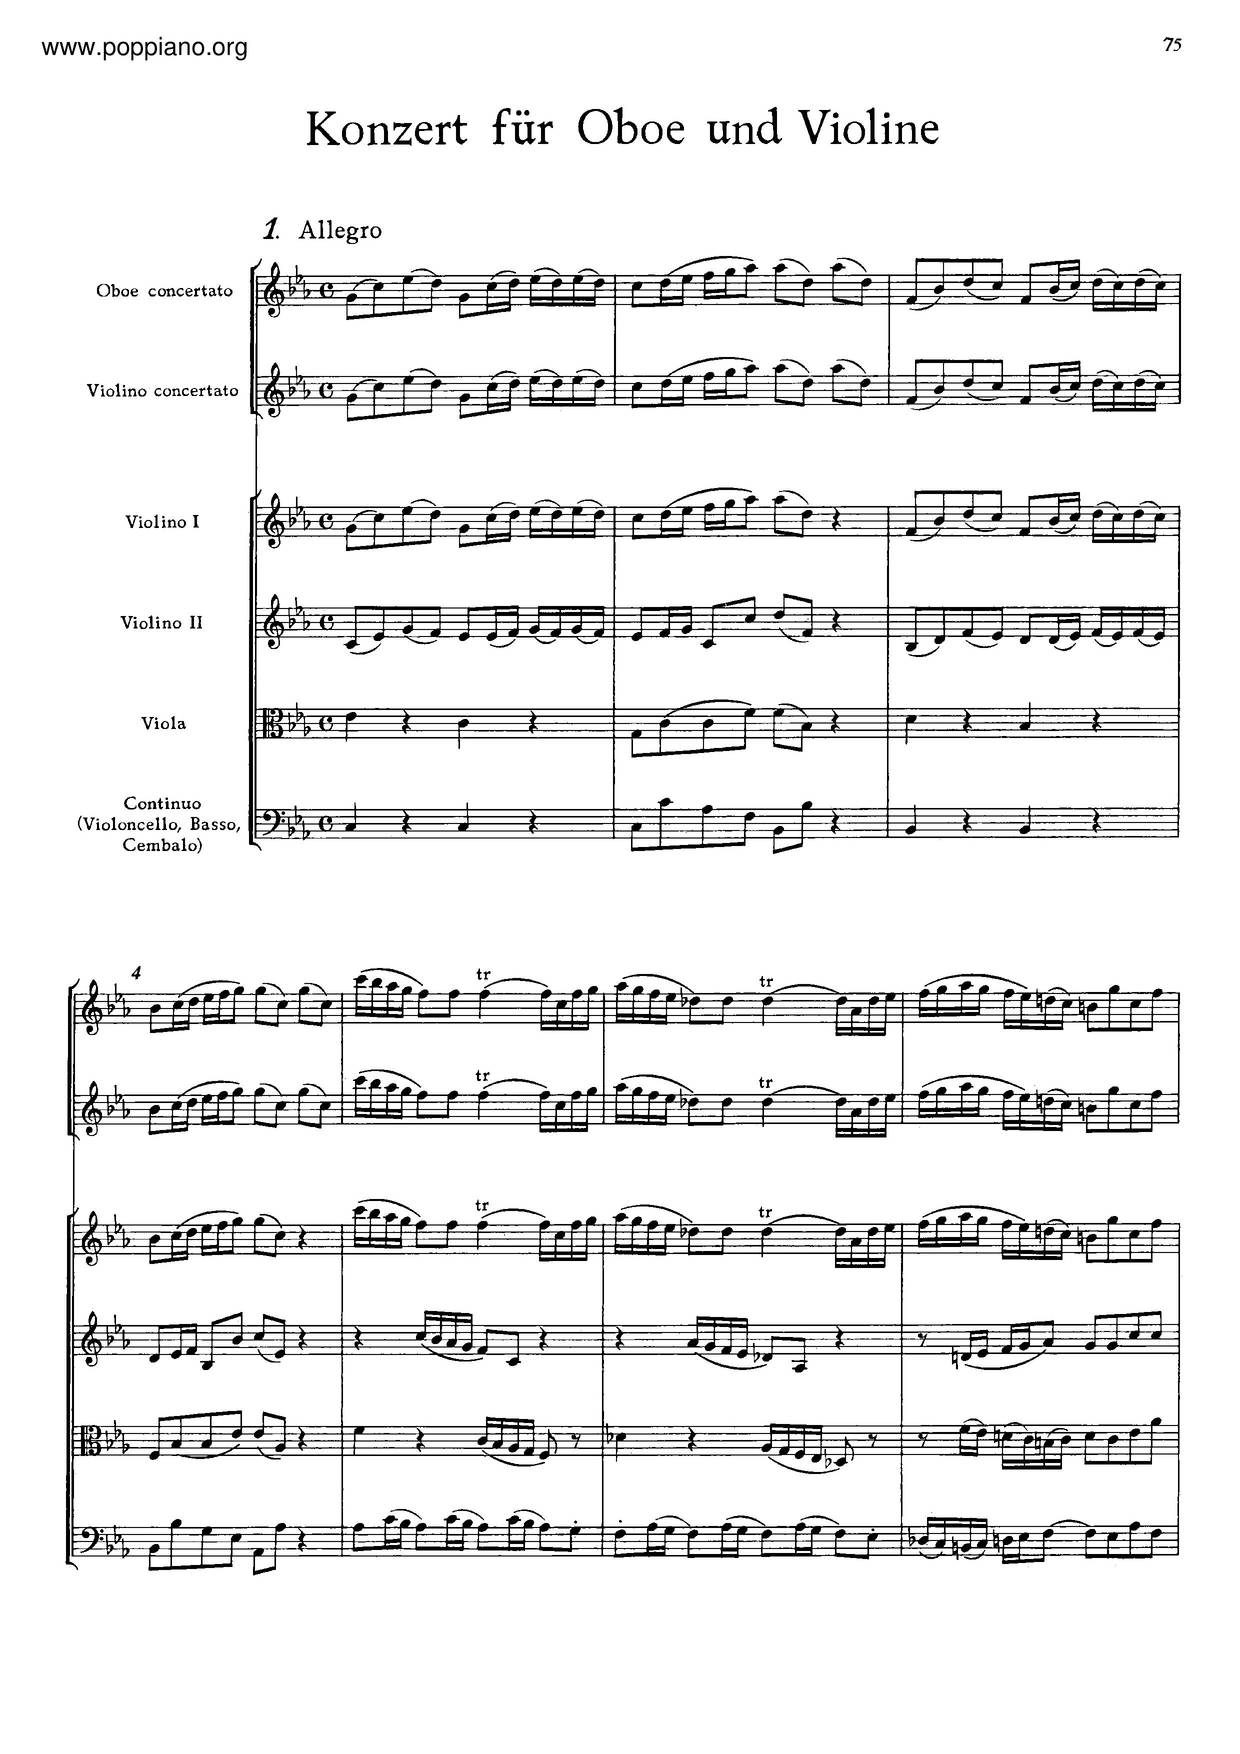 Concerto For Violin And Oboe In C Minor, BWV 1060R琴谱